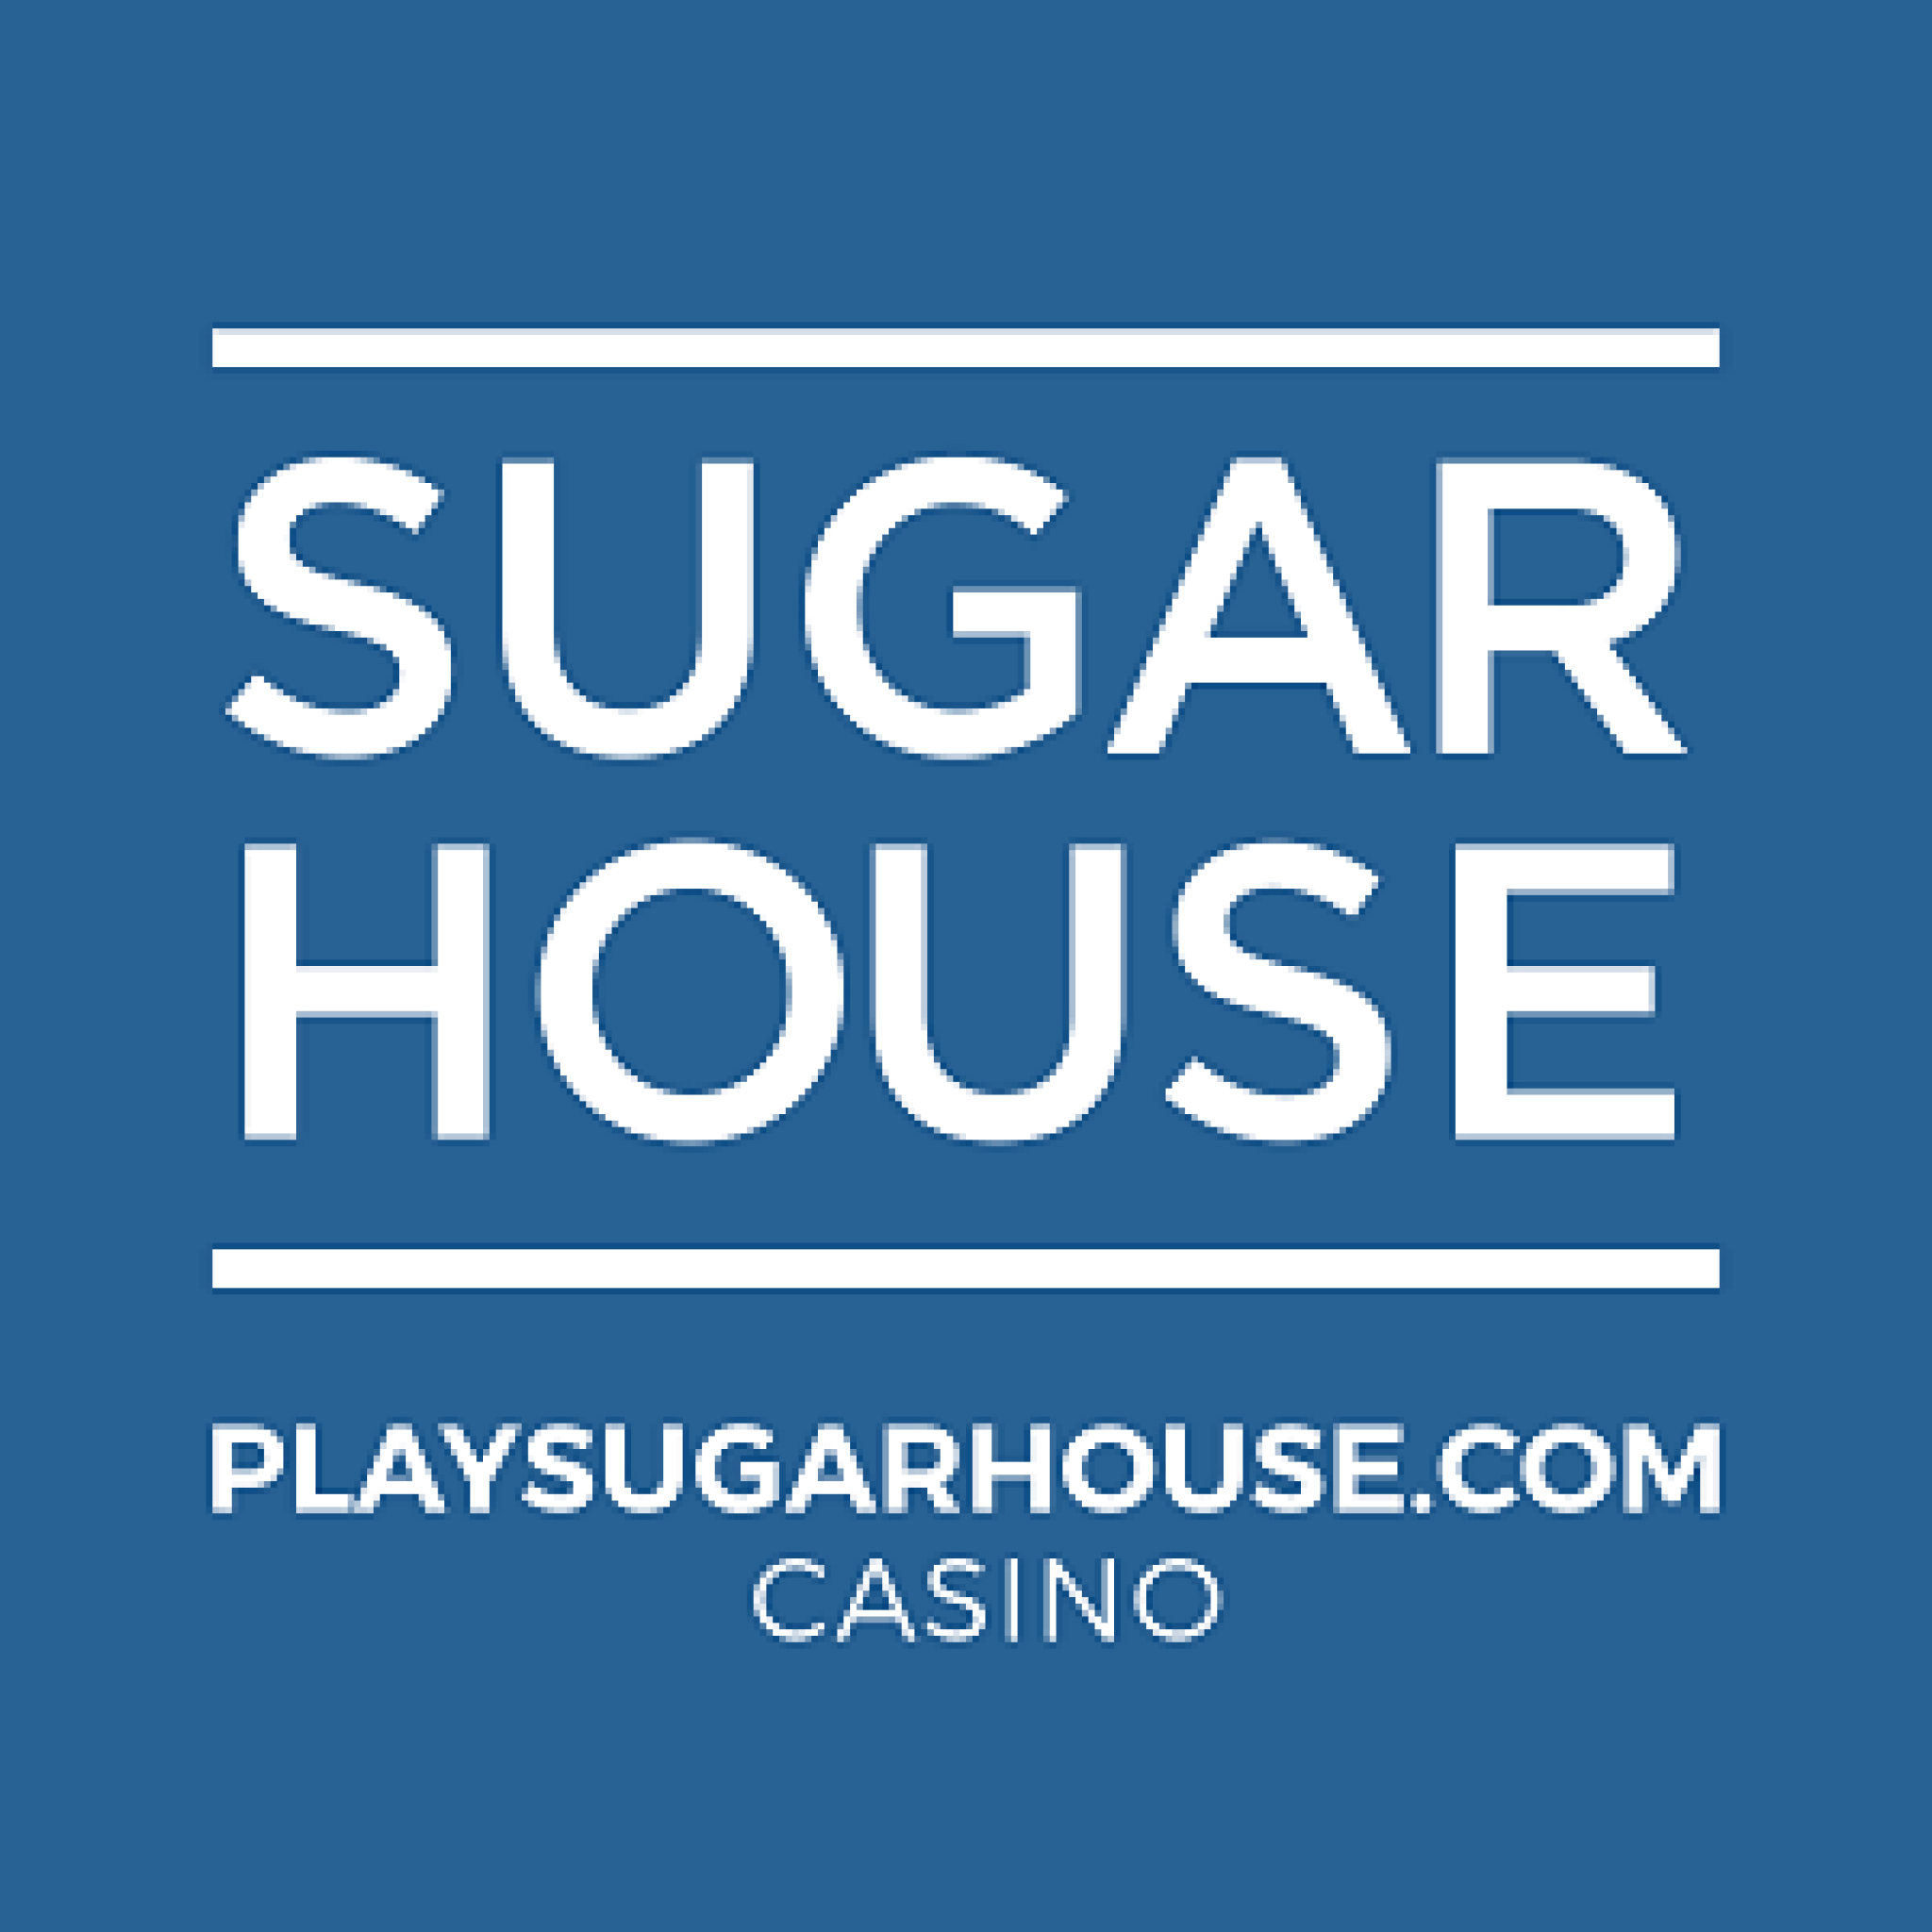 sugarhouse casino restaurants